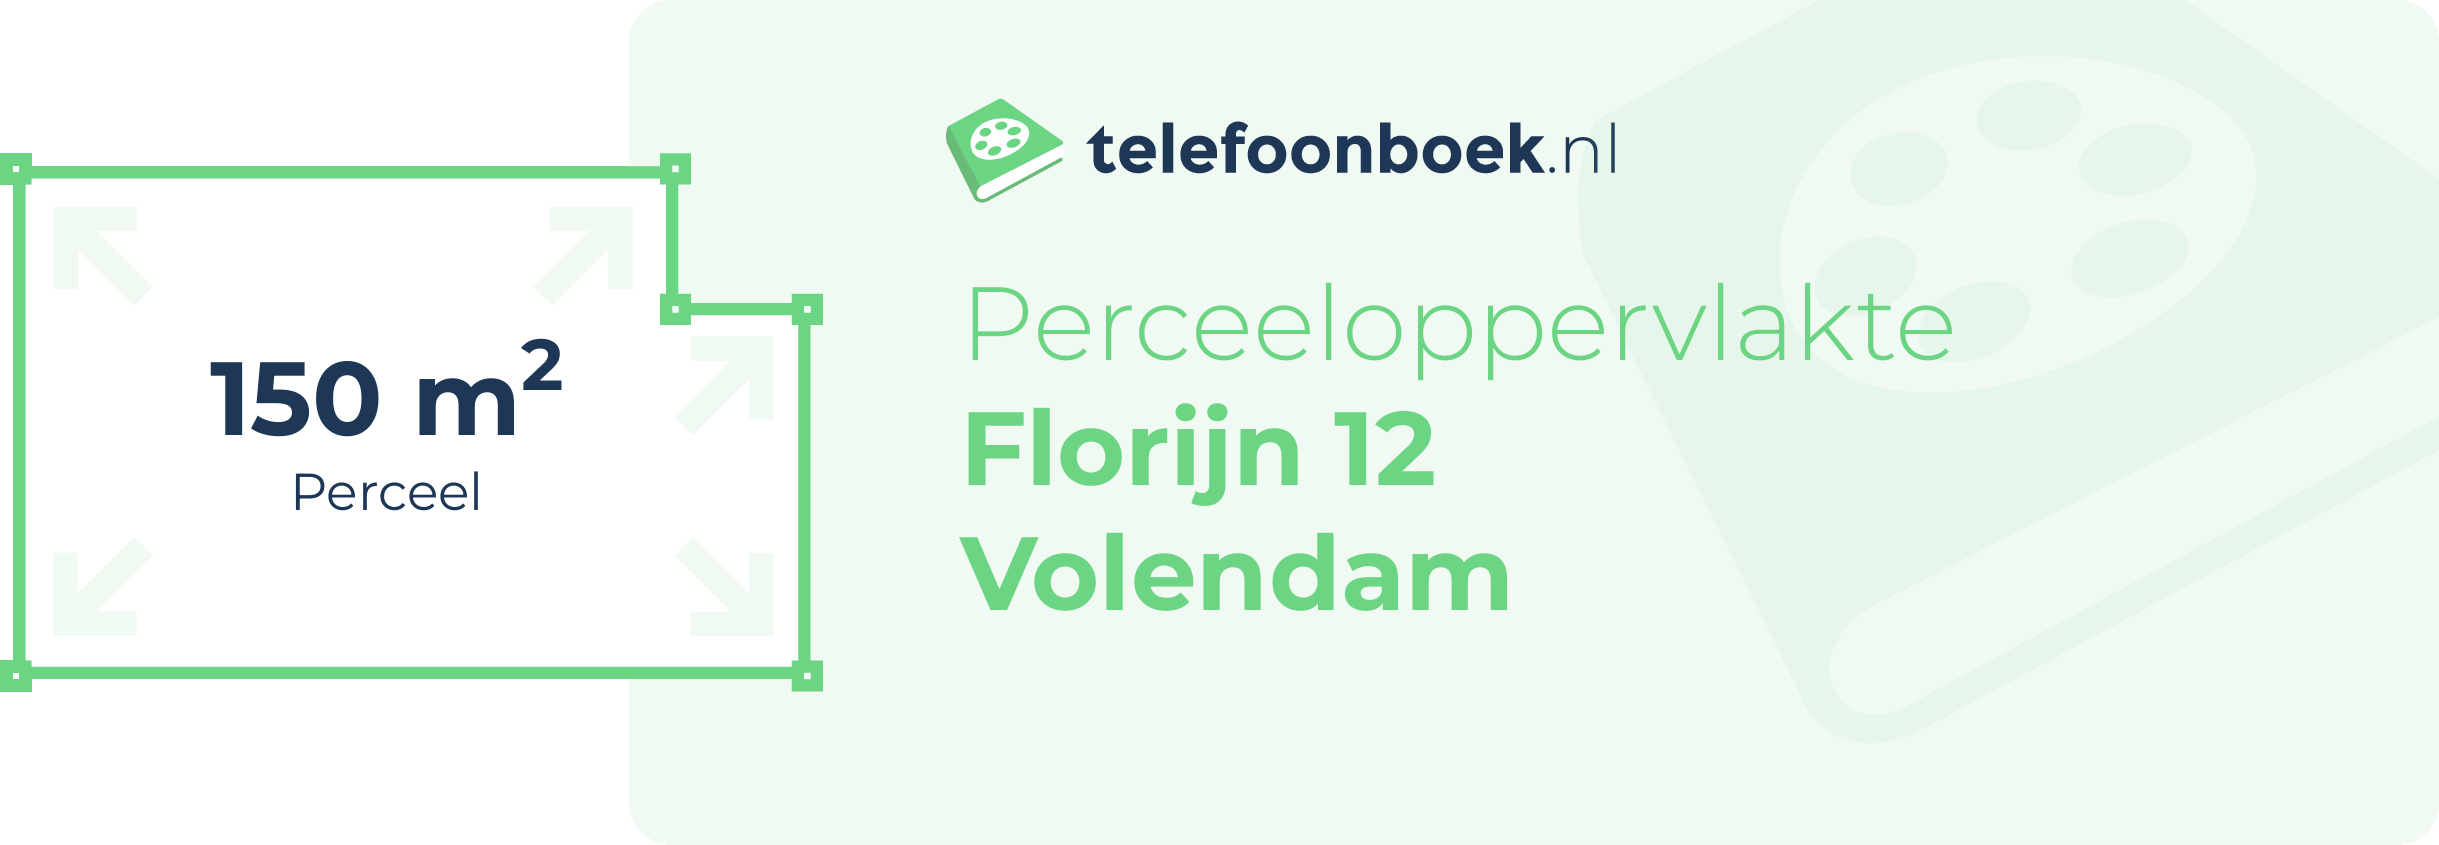 Perceeloppervlakte Florijn 12 Volendam